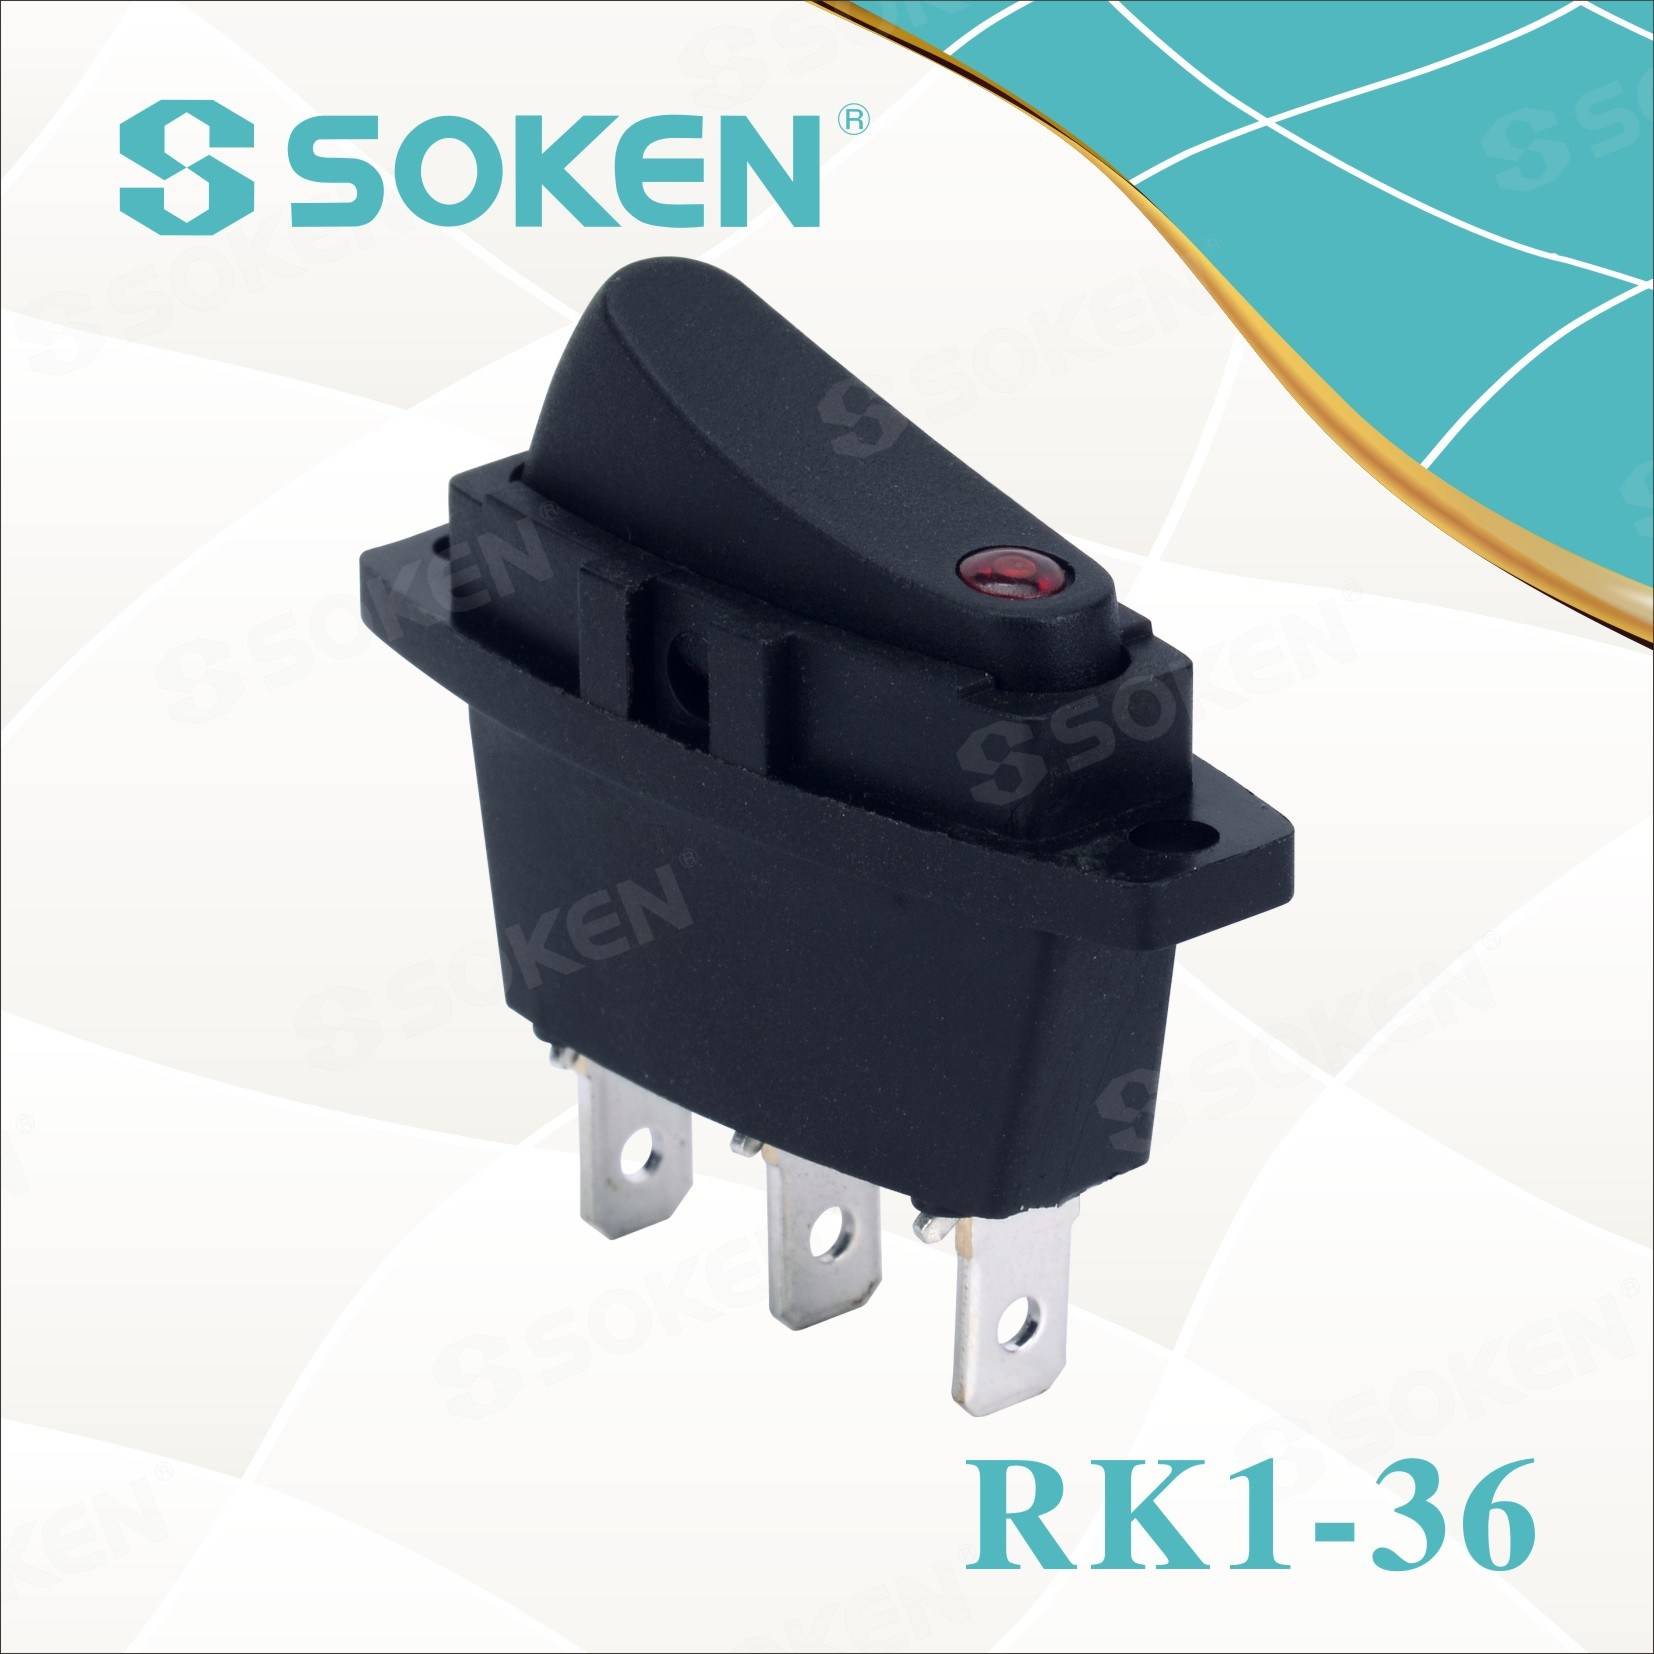 OEM/ODM Manufacturer Led Indicator Lamp Wholesale -
 Soken Rk1-36 1X1n on off Illuminated Rocker Switch – Master Soken Electrical